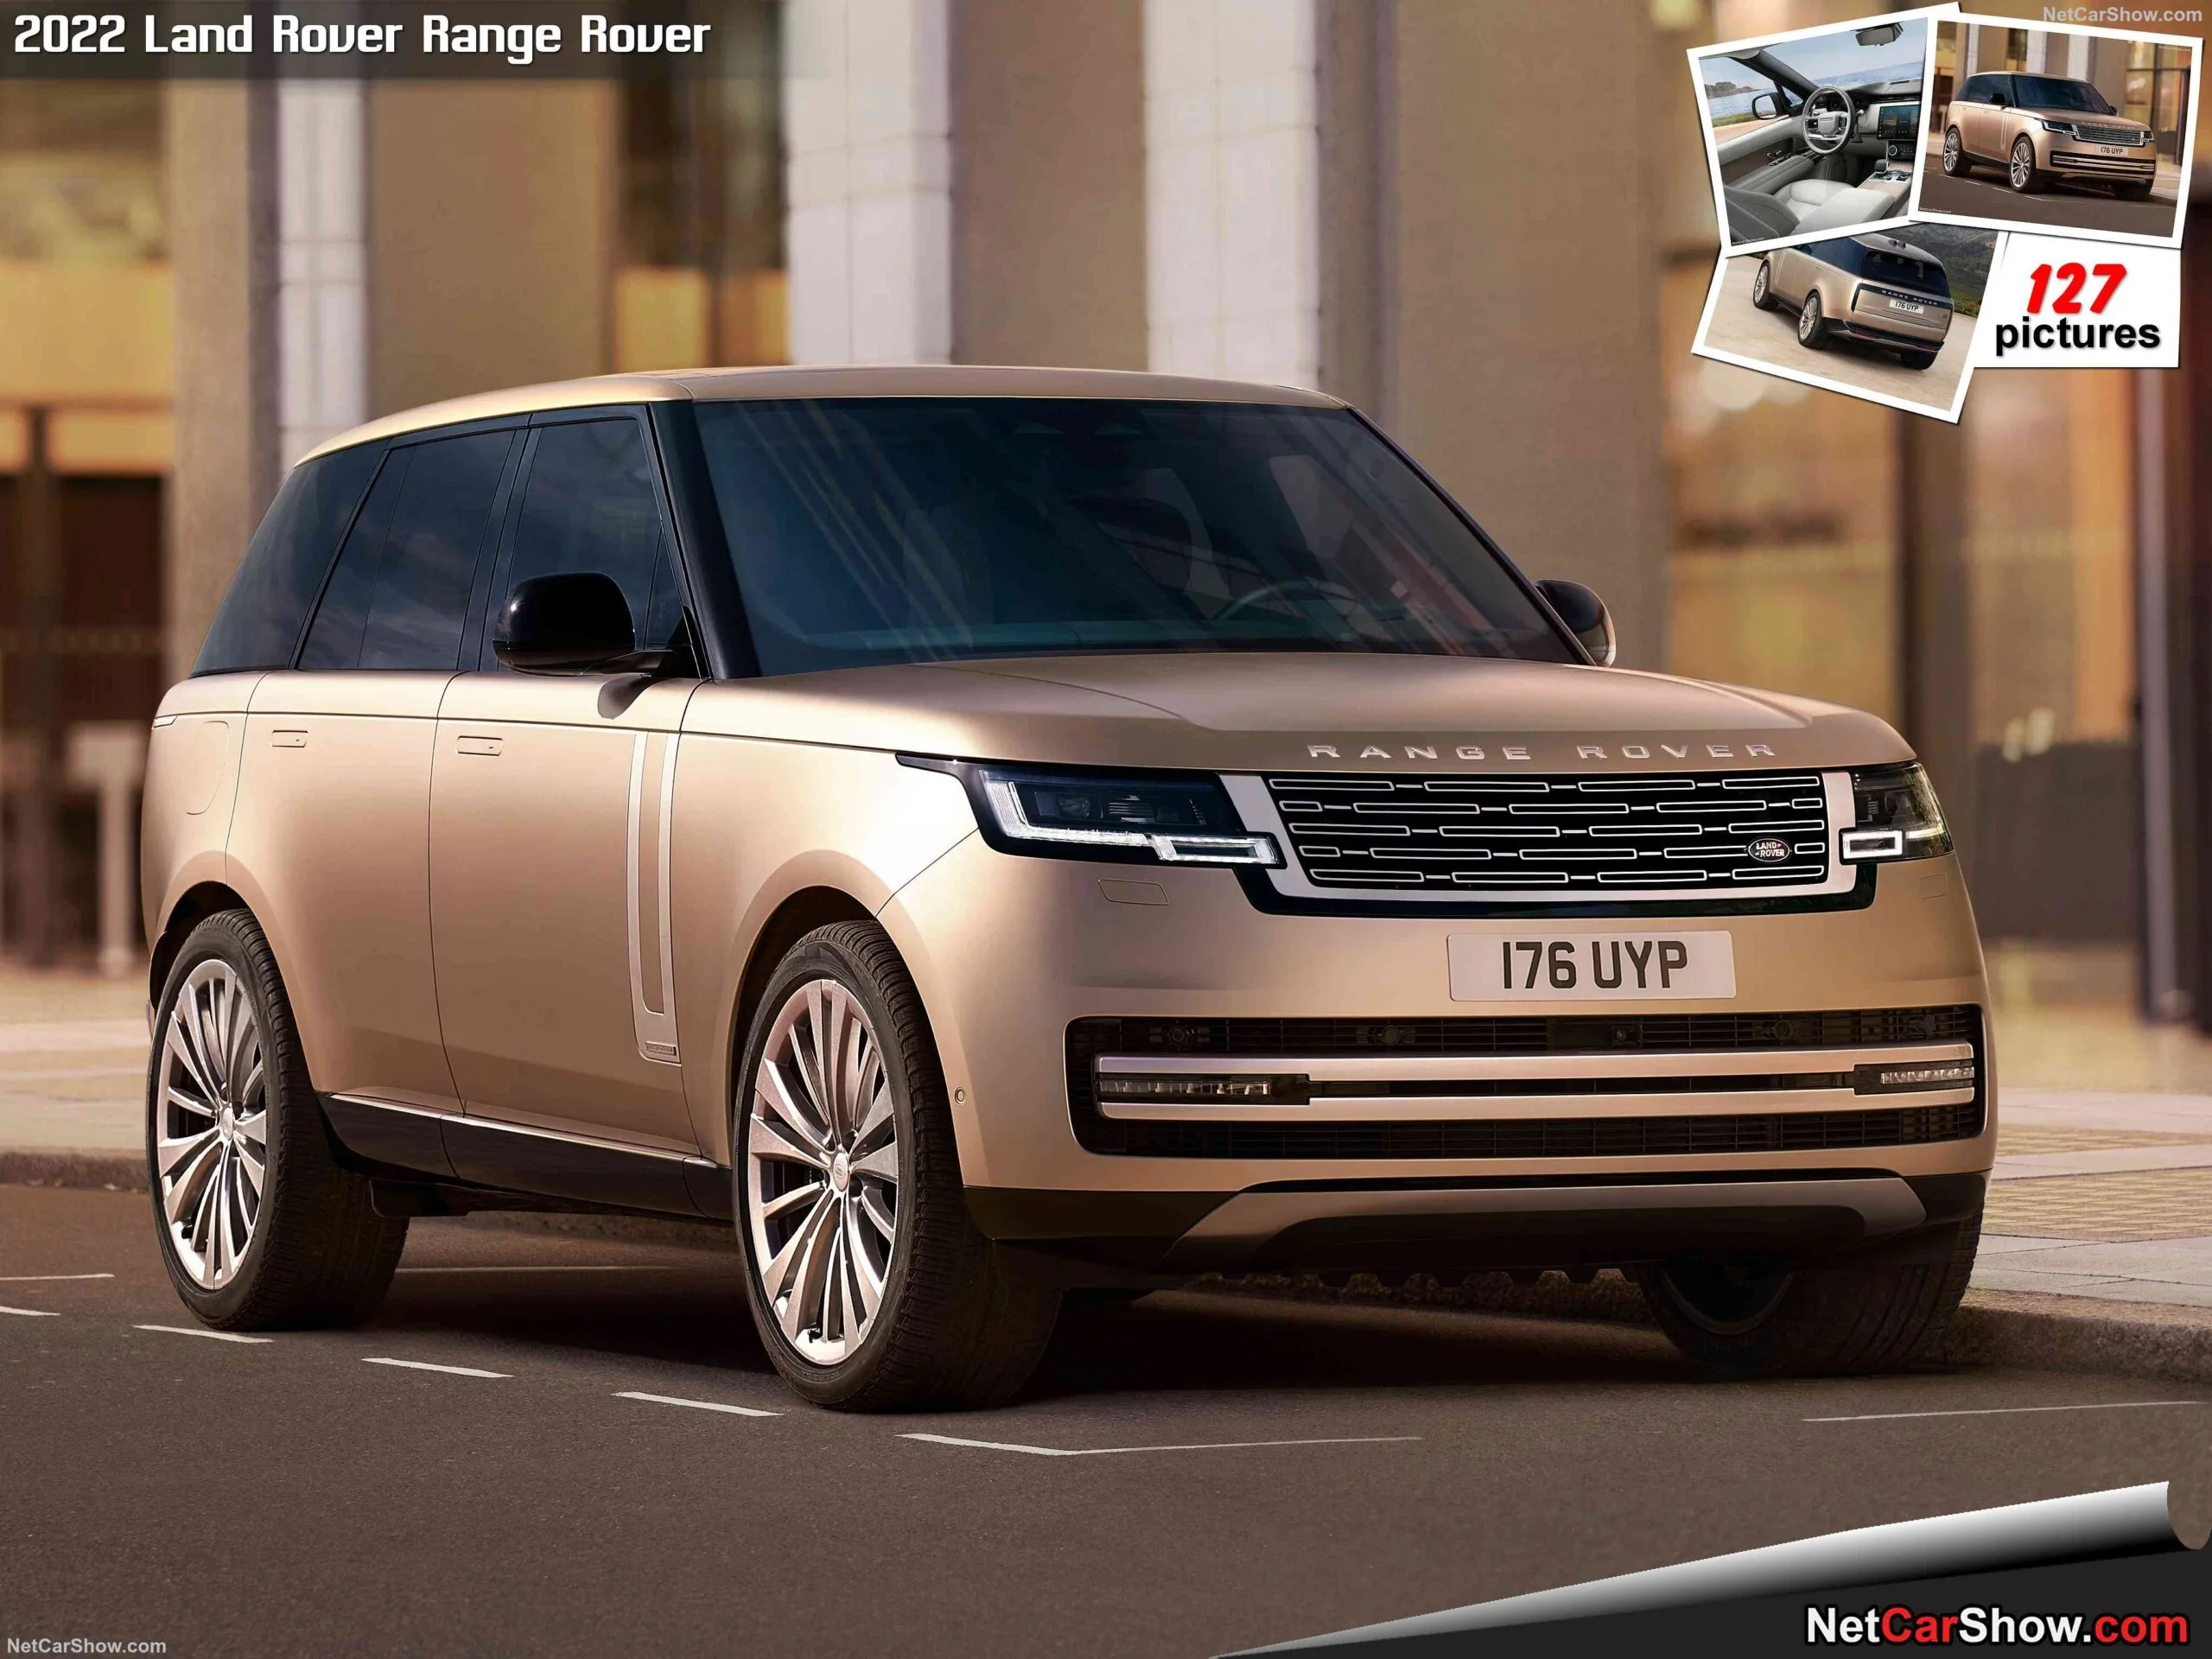 Range Rover price in pakistan